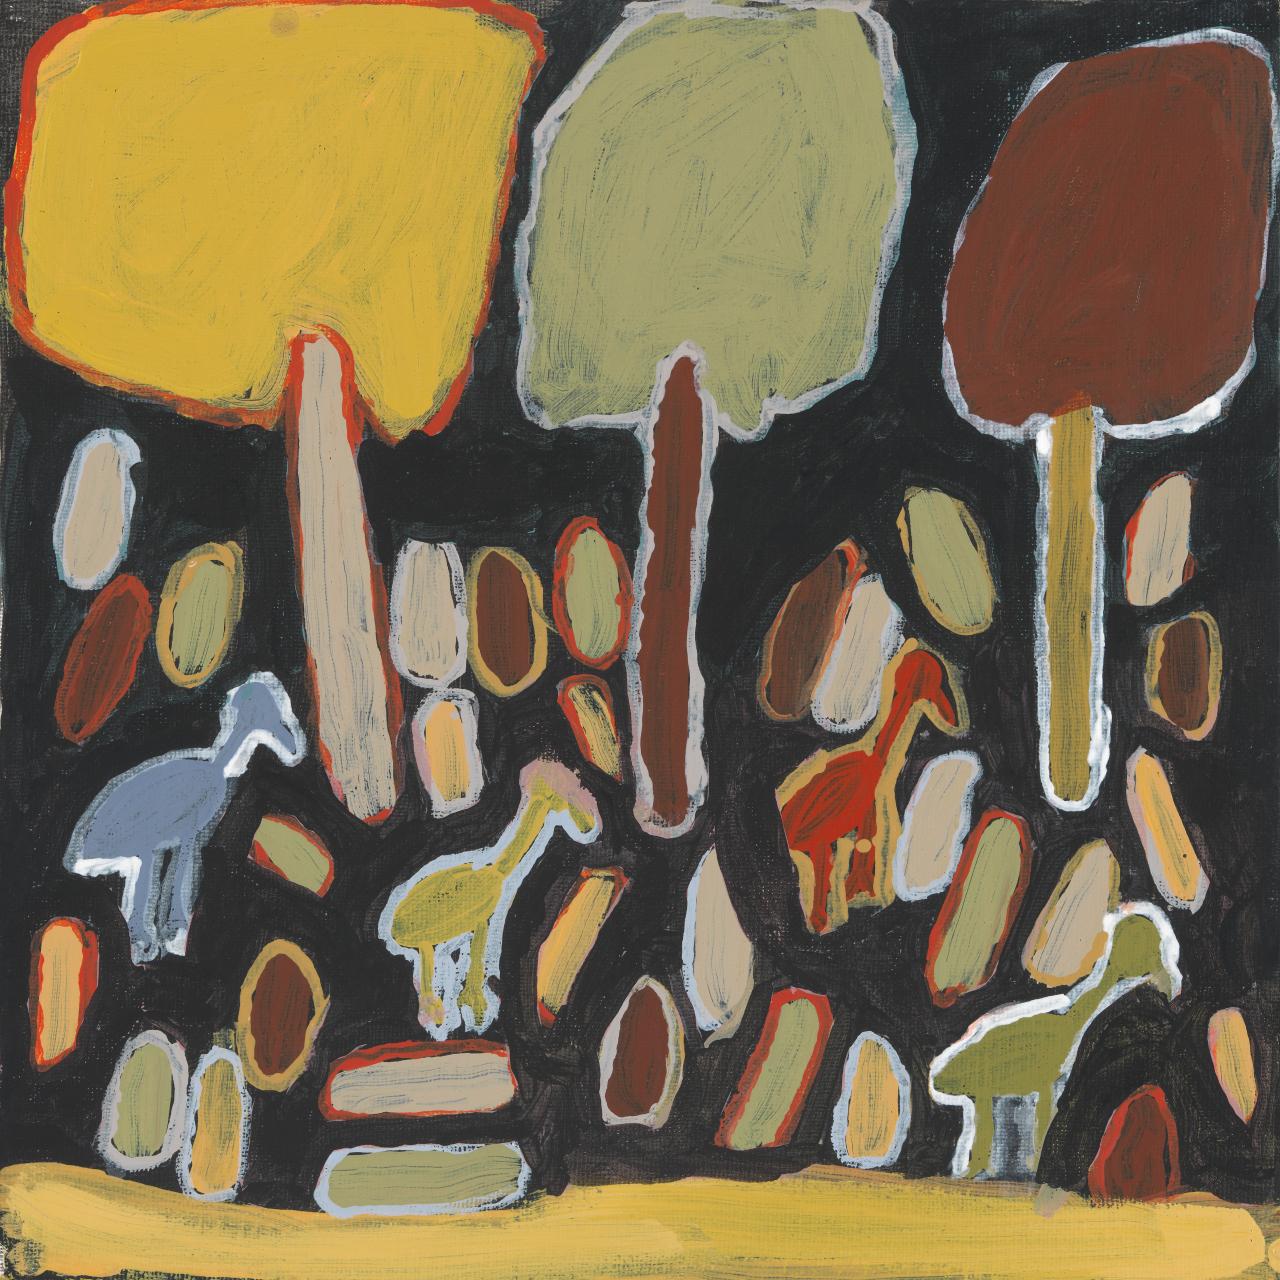  Margaret Rarru,  Buwata (Bush turkey),  synthetic polymer paint on canvas, 30.5 × 30.5 cm, 2010. (National Gallery of Victoria) 